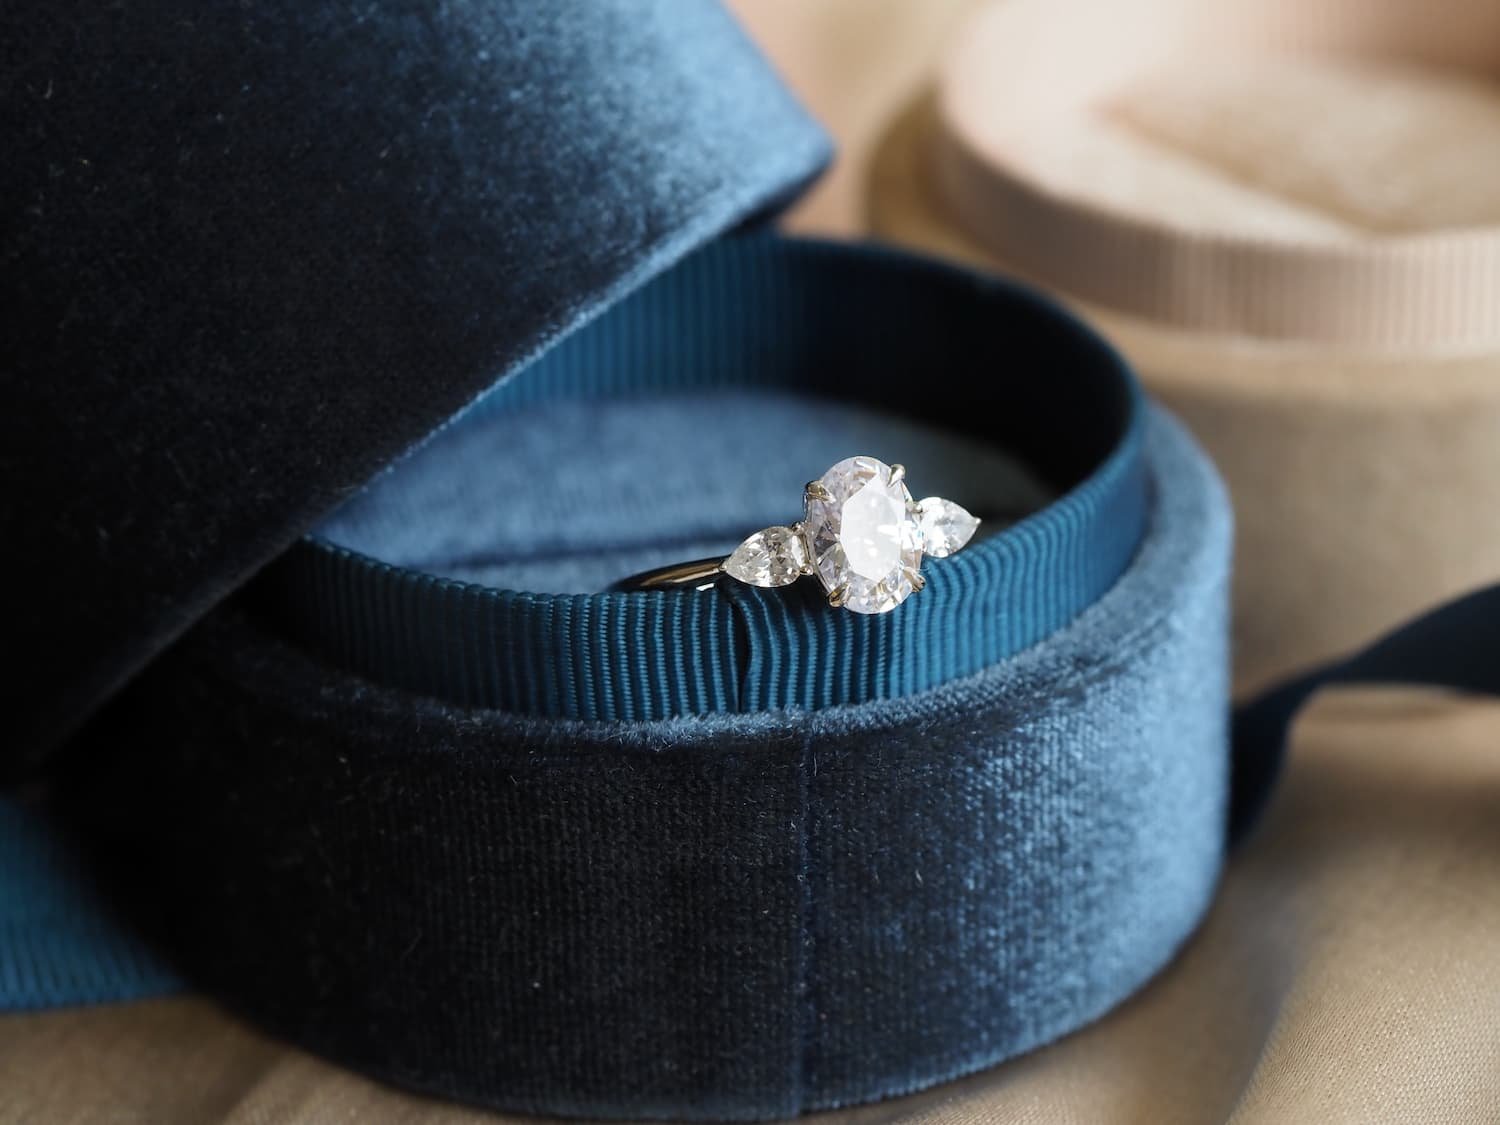 Oval Diamond Engagement Ring